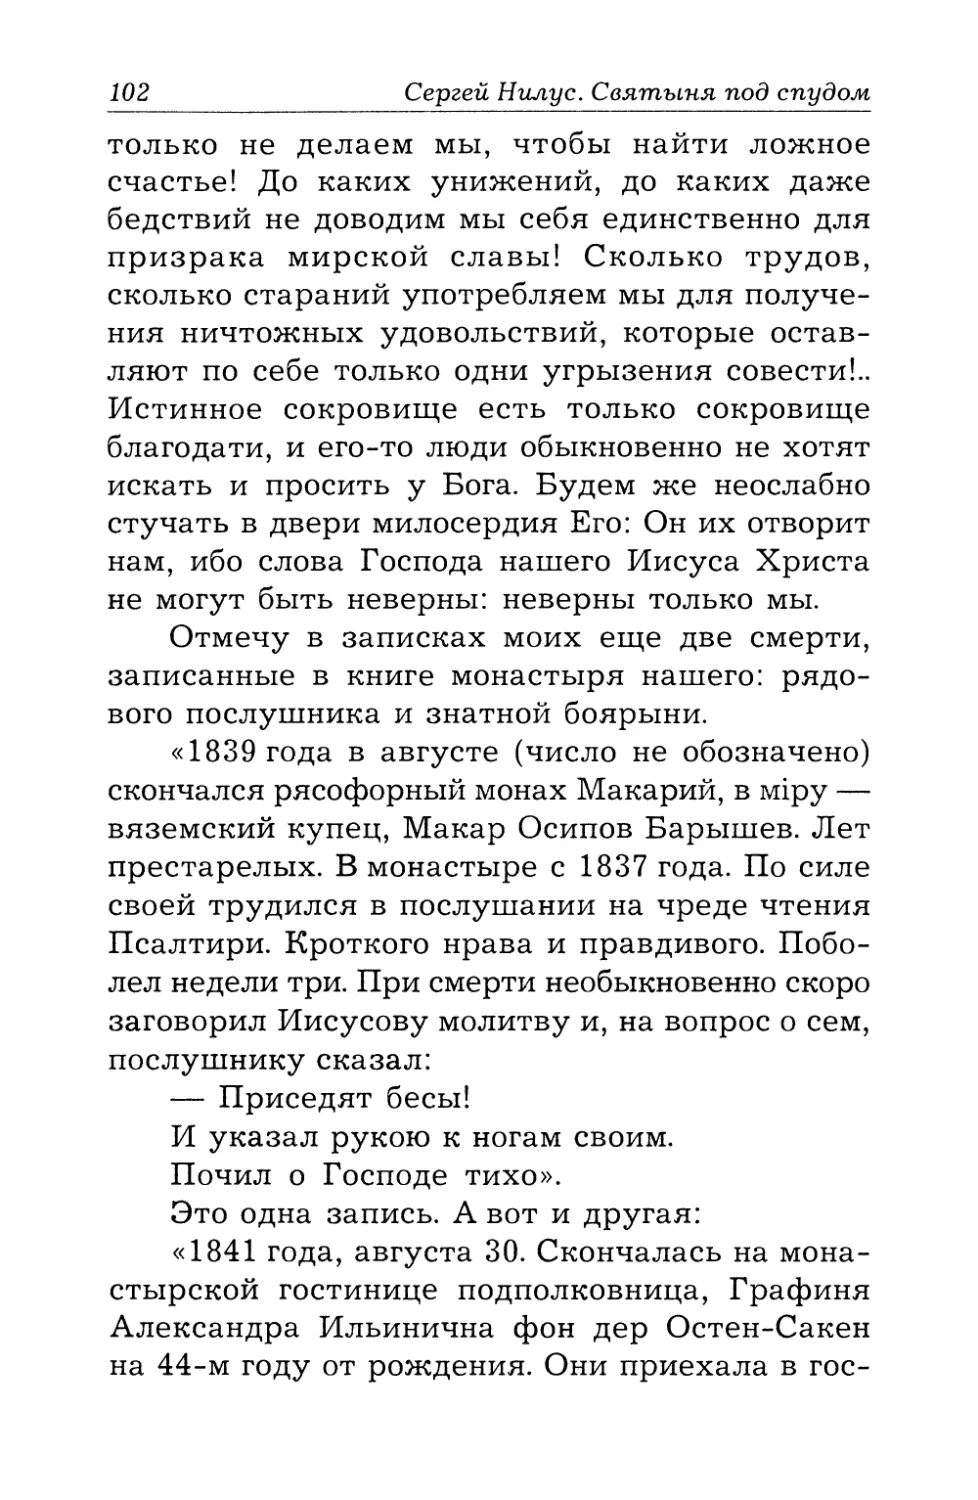 Кончина рясофорного монаха и тетки графа Л. Н. Толстого